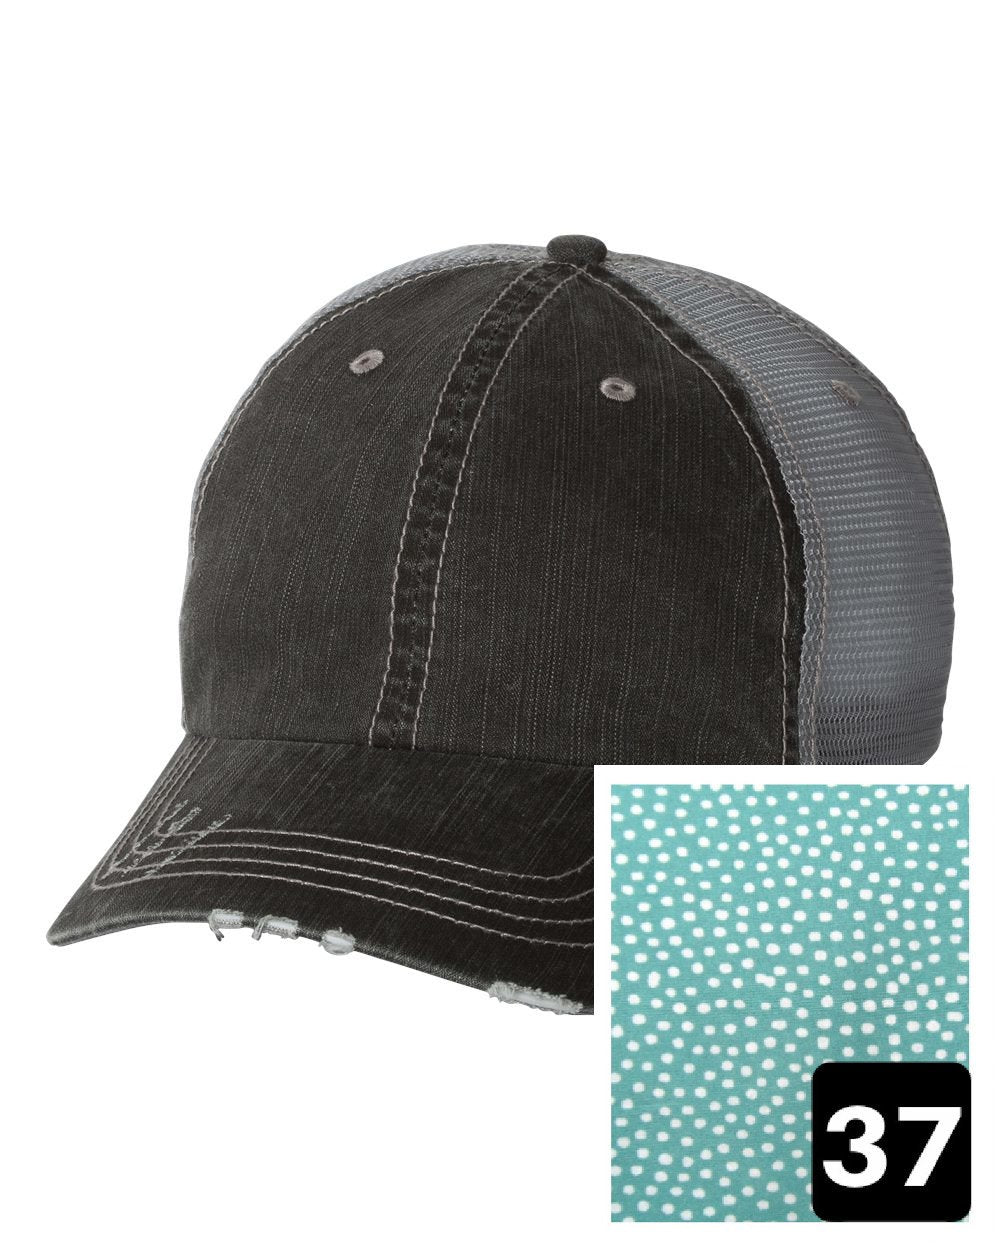 North Dakota Hat - Distressed Ponytail or Messy Bun Hat  - Many Fabric Choices